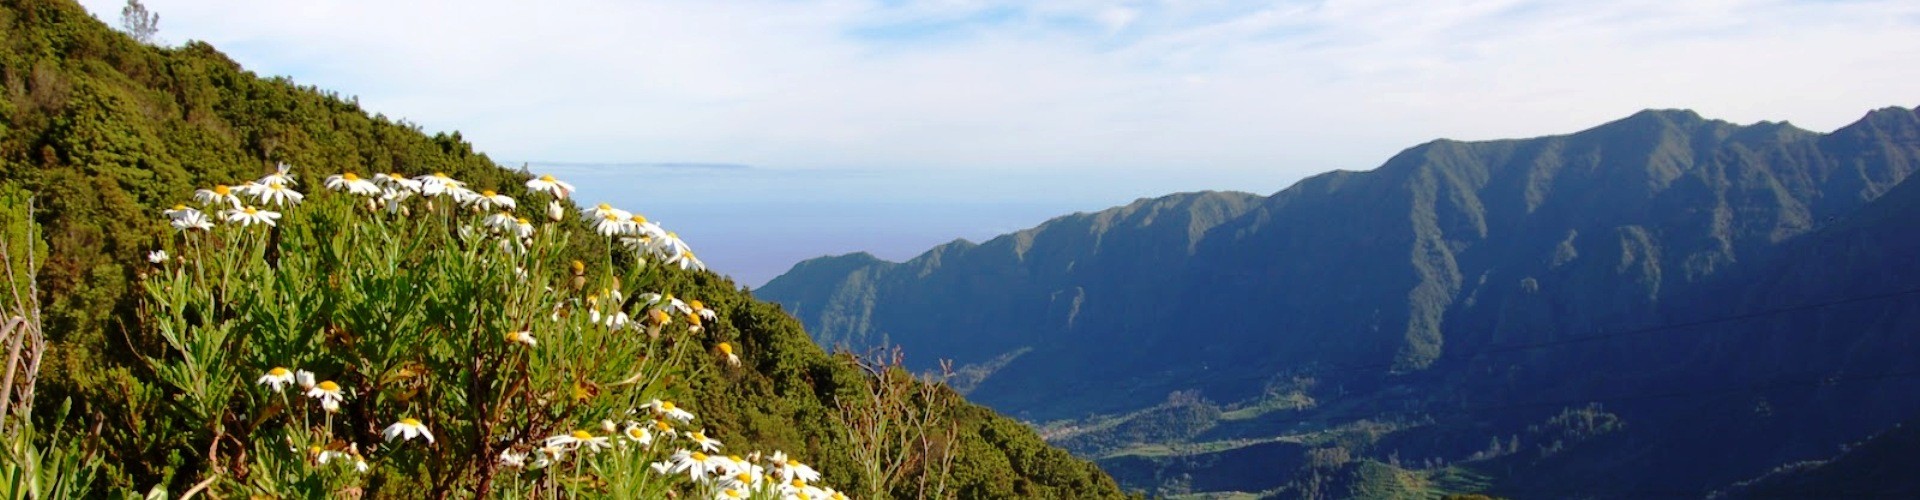 Miradouro da Encumeada Viewpoint, Madeira